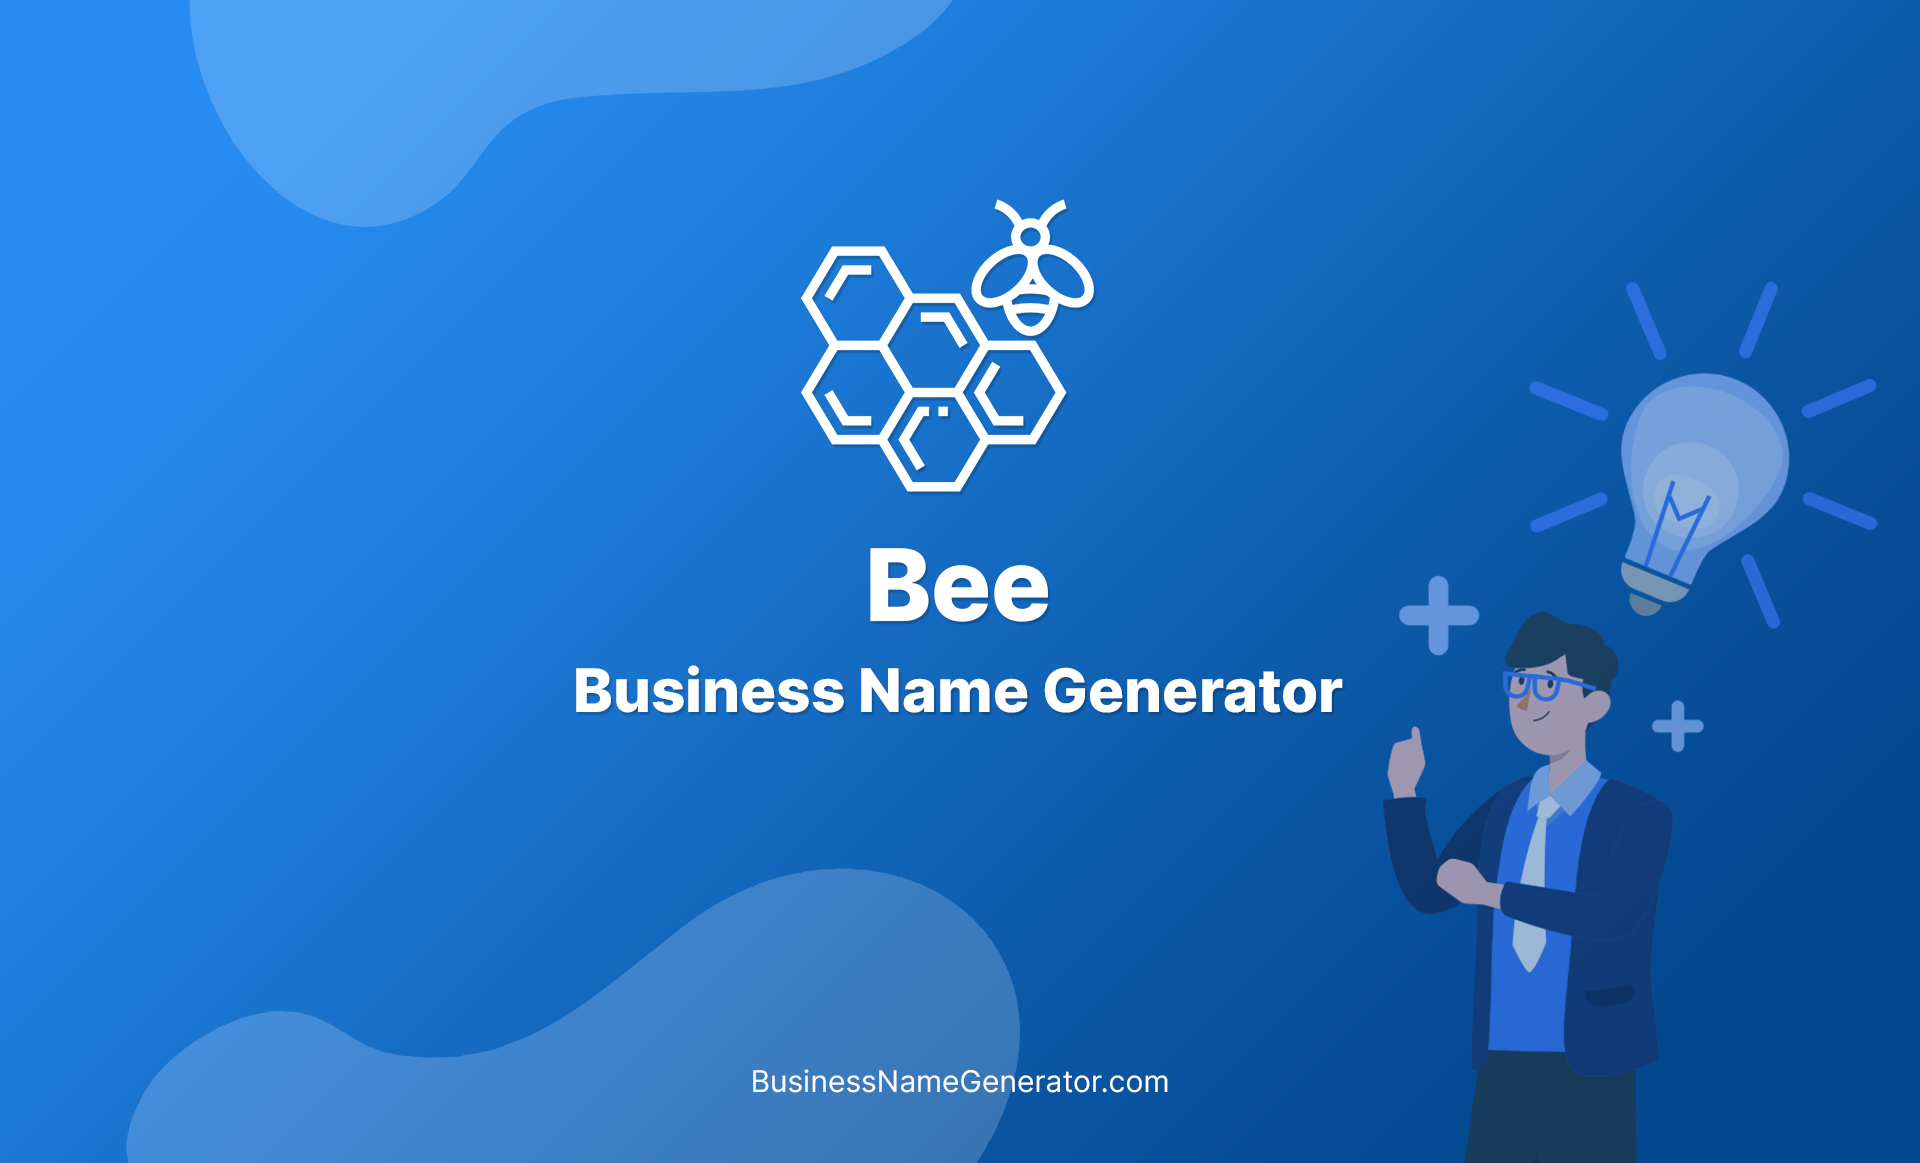 Bee Business Name Generator